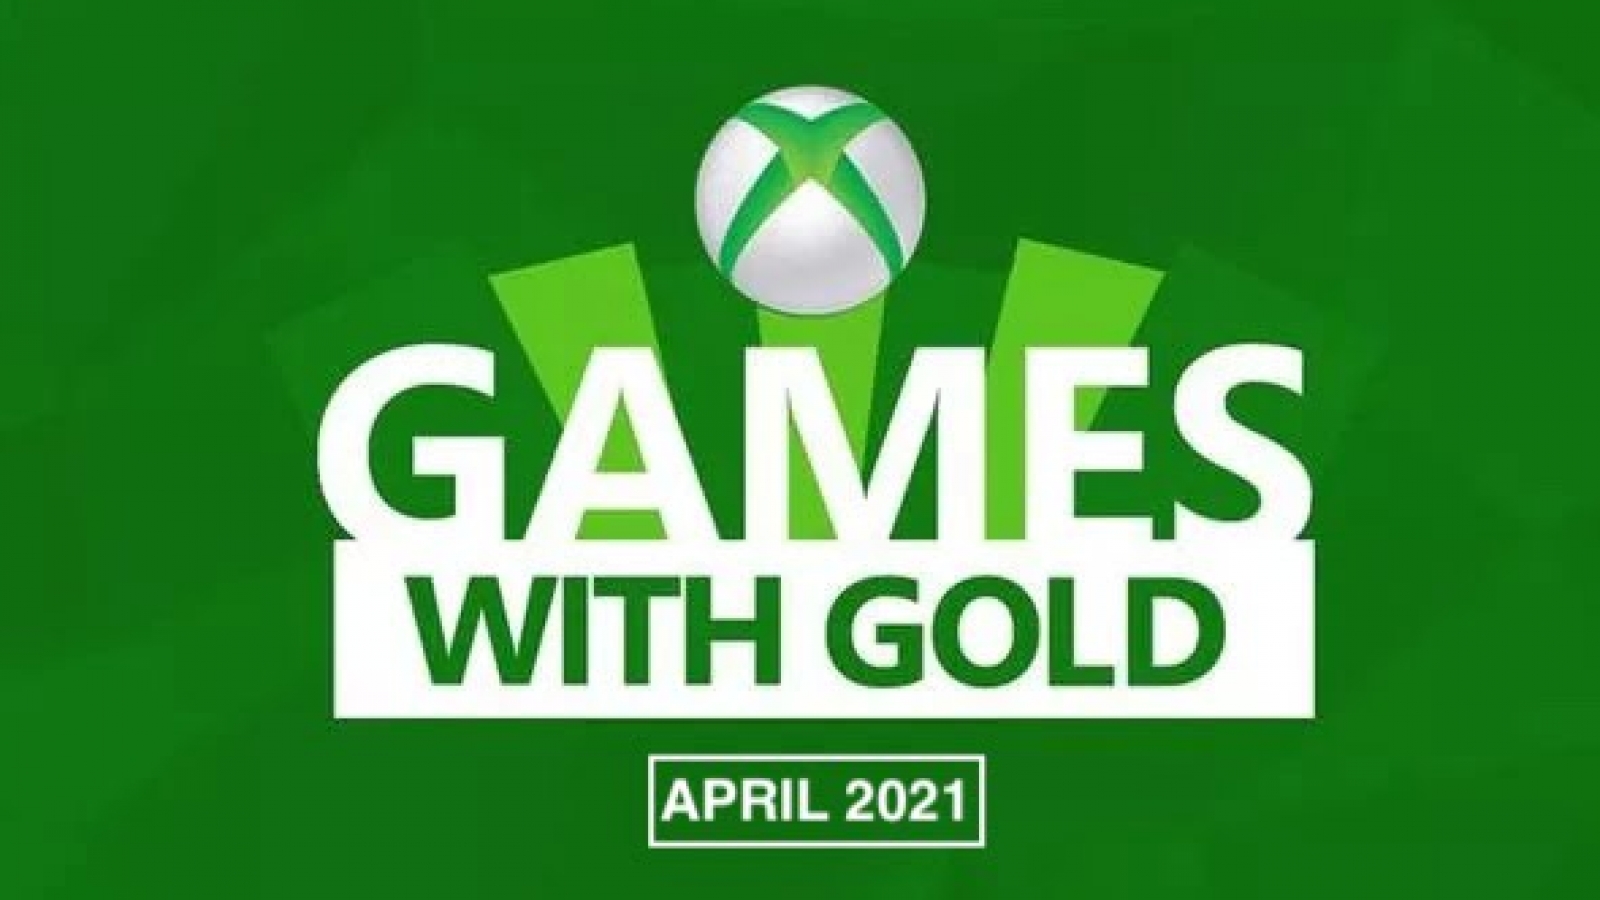 xbox live gold game pass besplatne igre april 2021 konzole i vauceri dopune